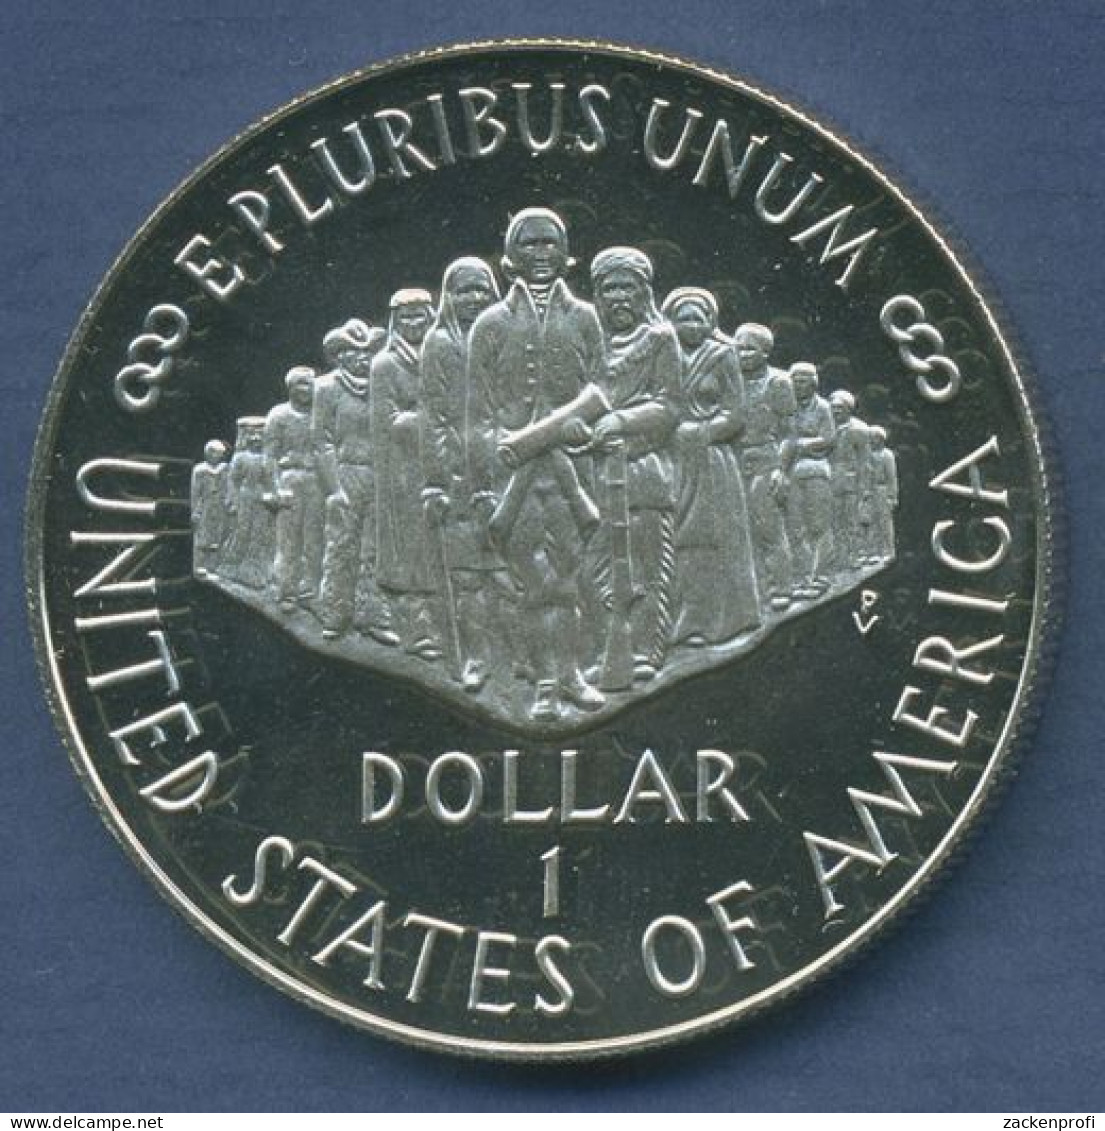 USA Dollar 1987 S, Constitution Bicentennial, KM 220 PP Proof (m3513) - Gedenkmünzen